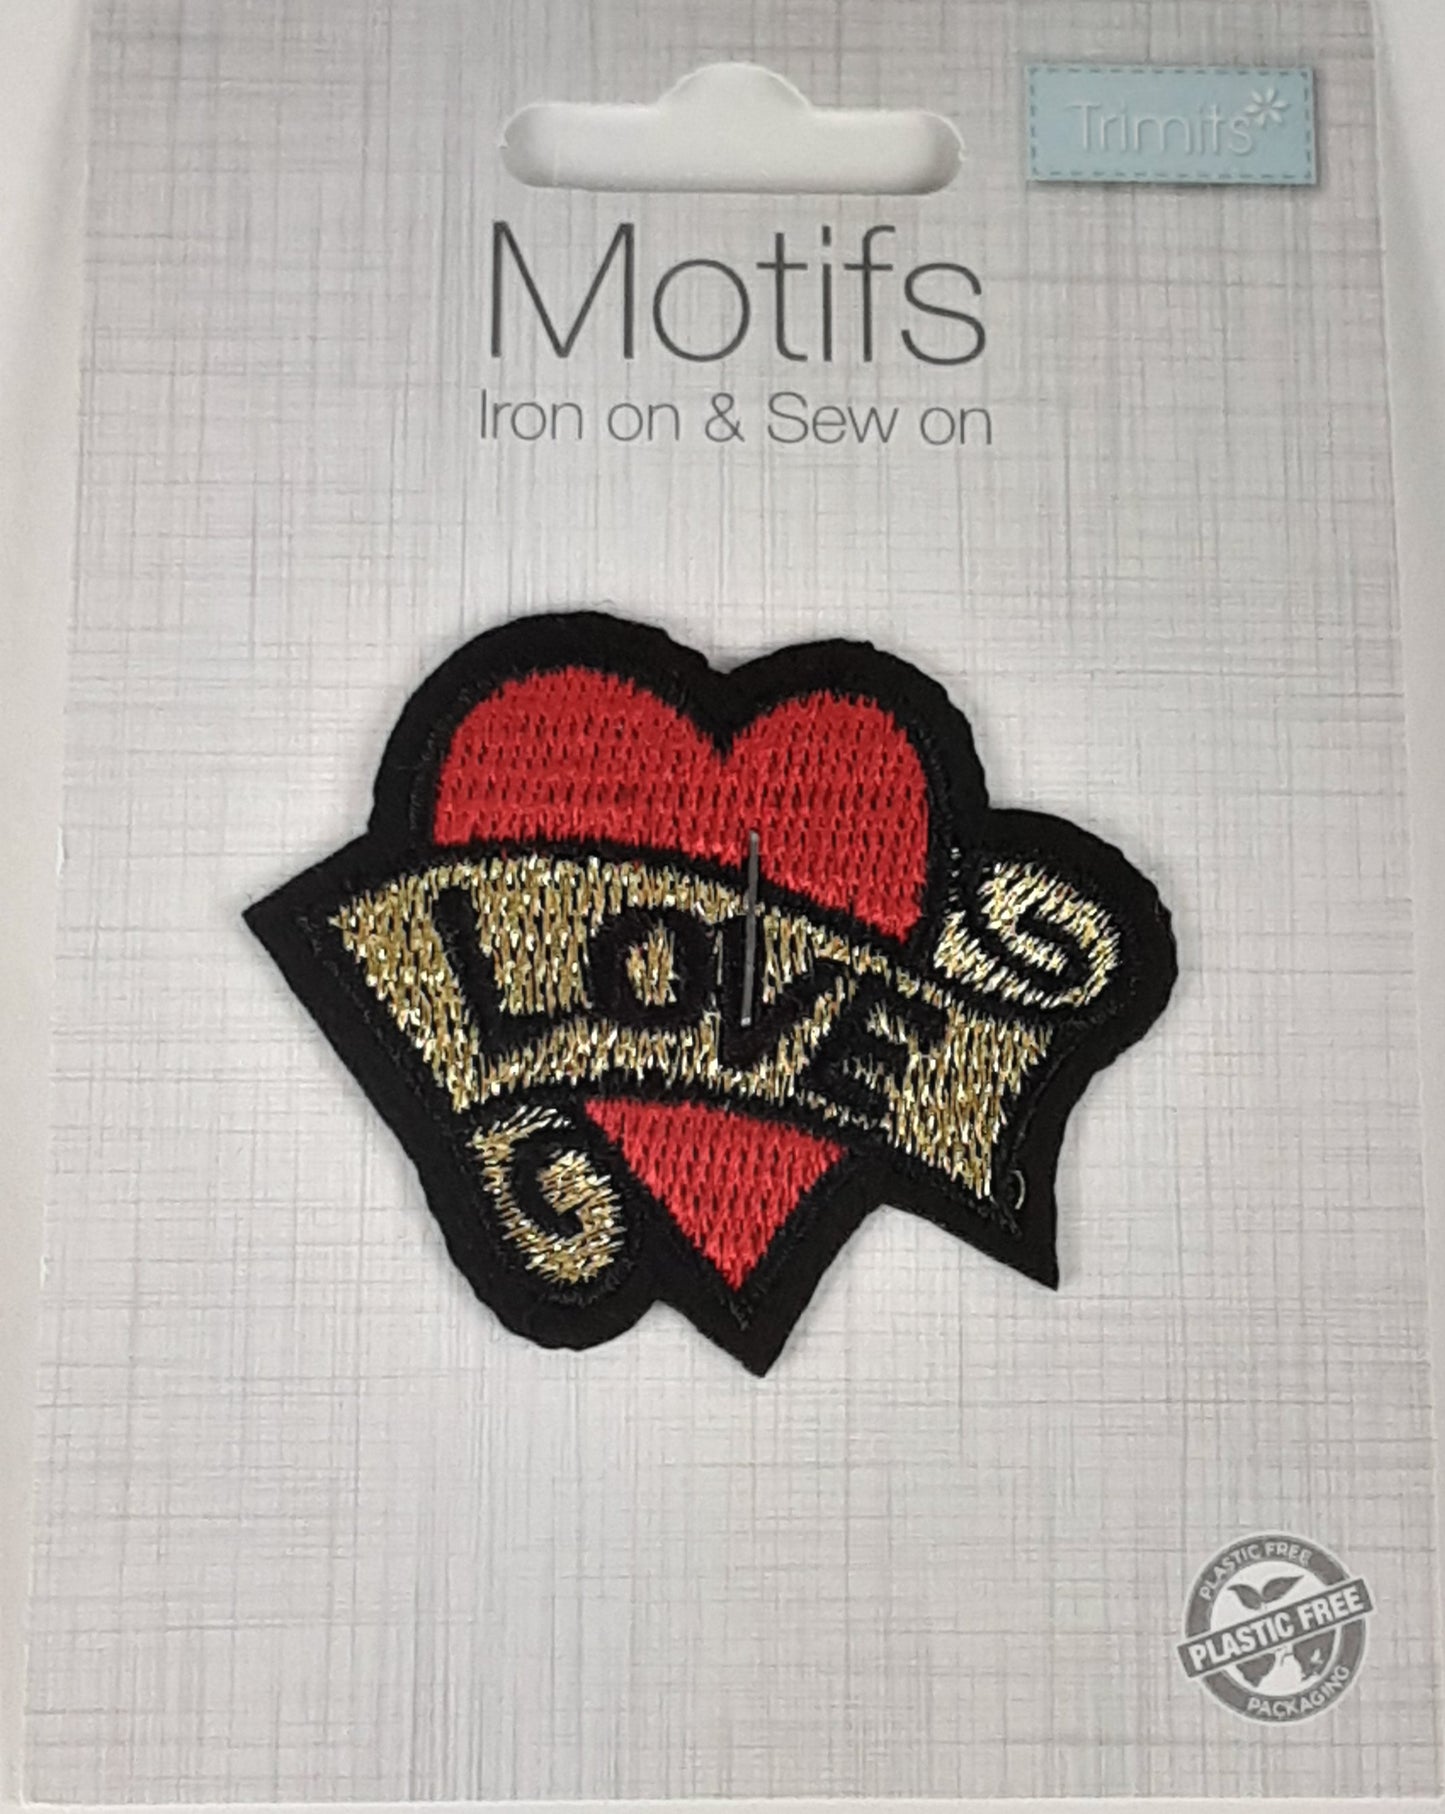 Iron or sew on Motifs-Love Heart